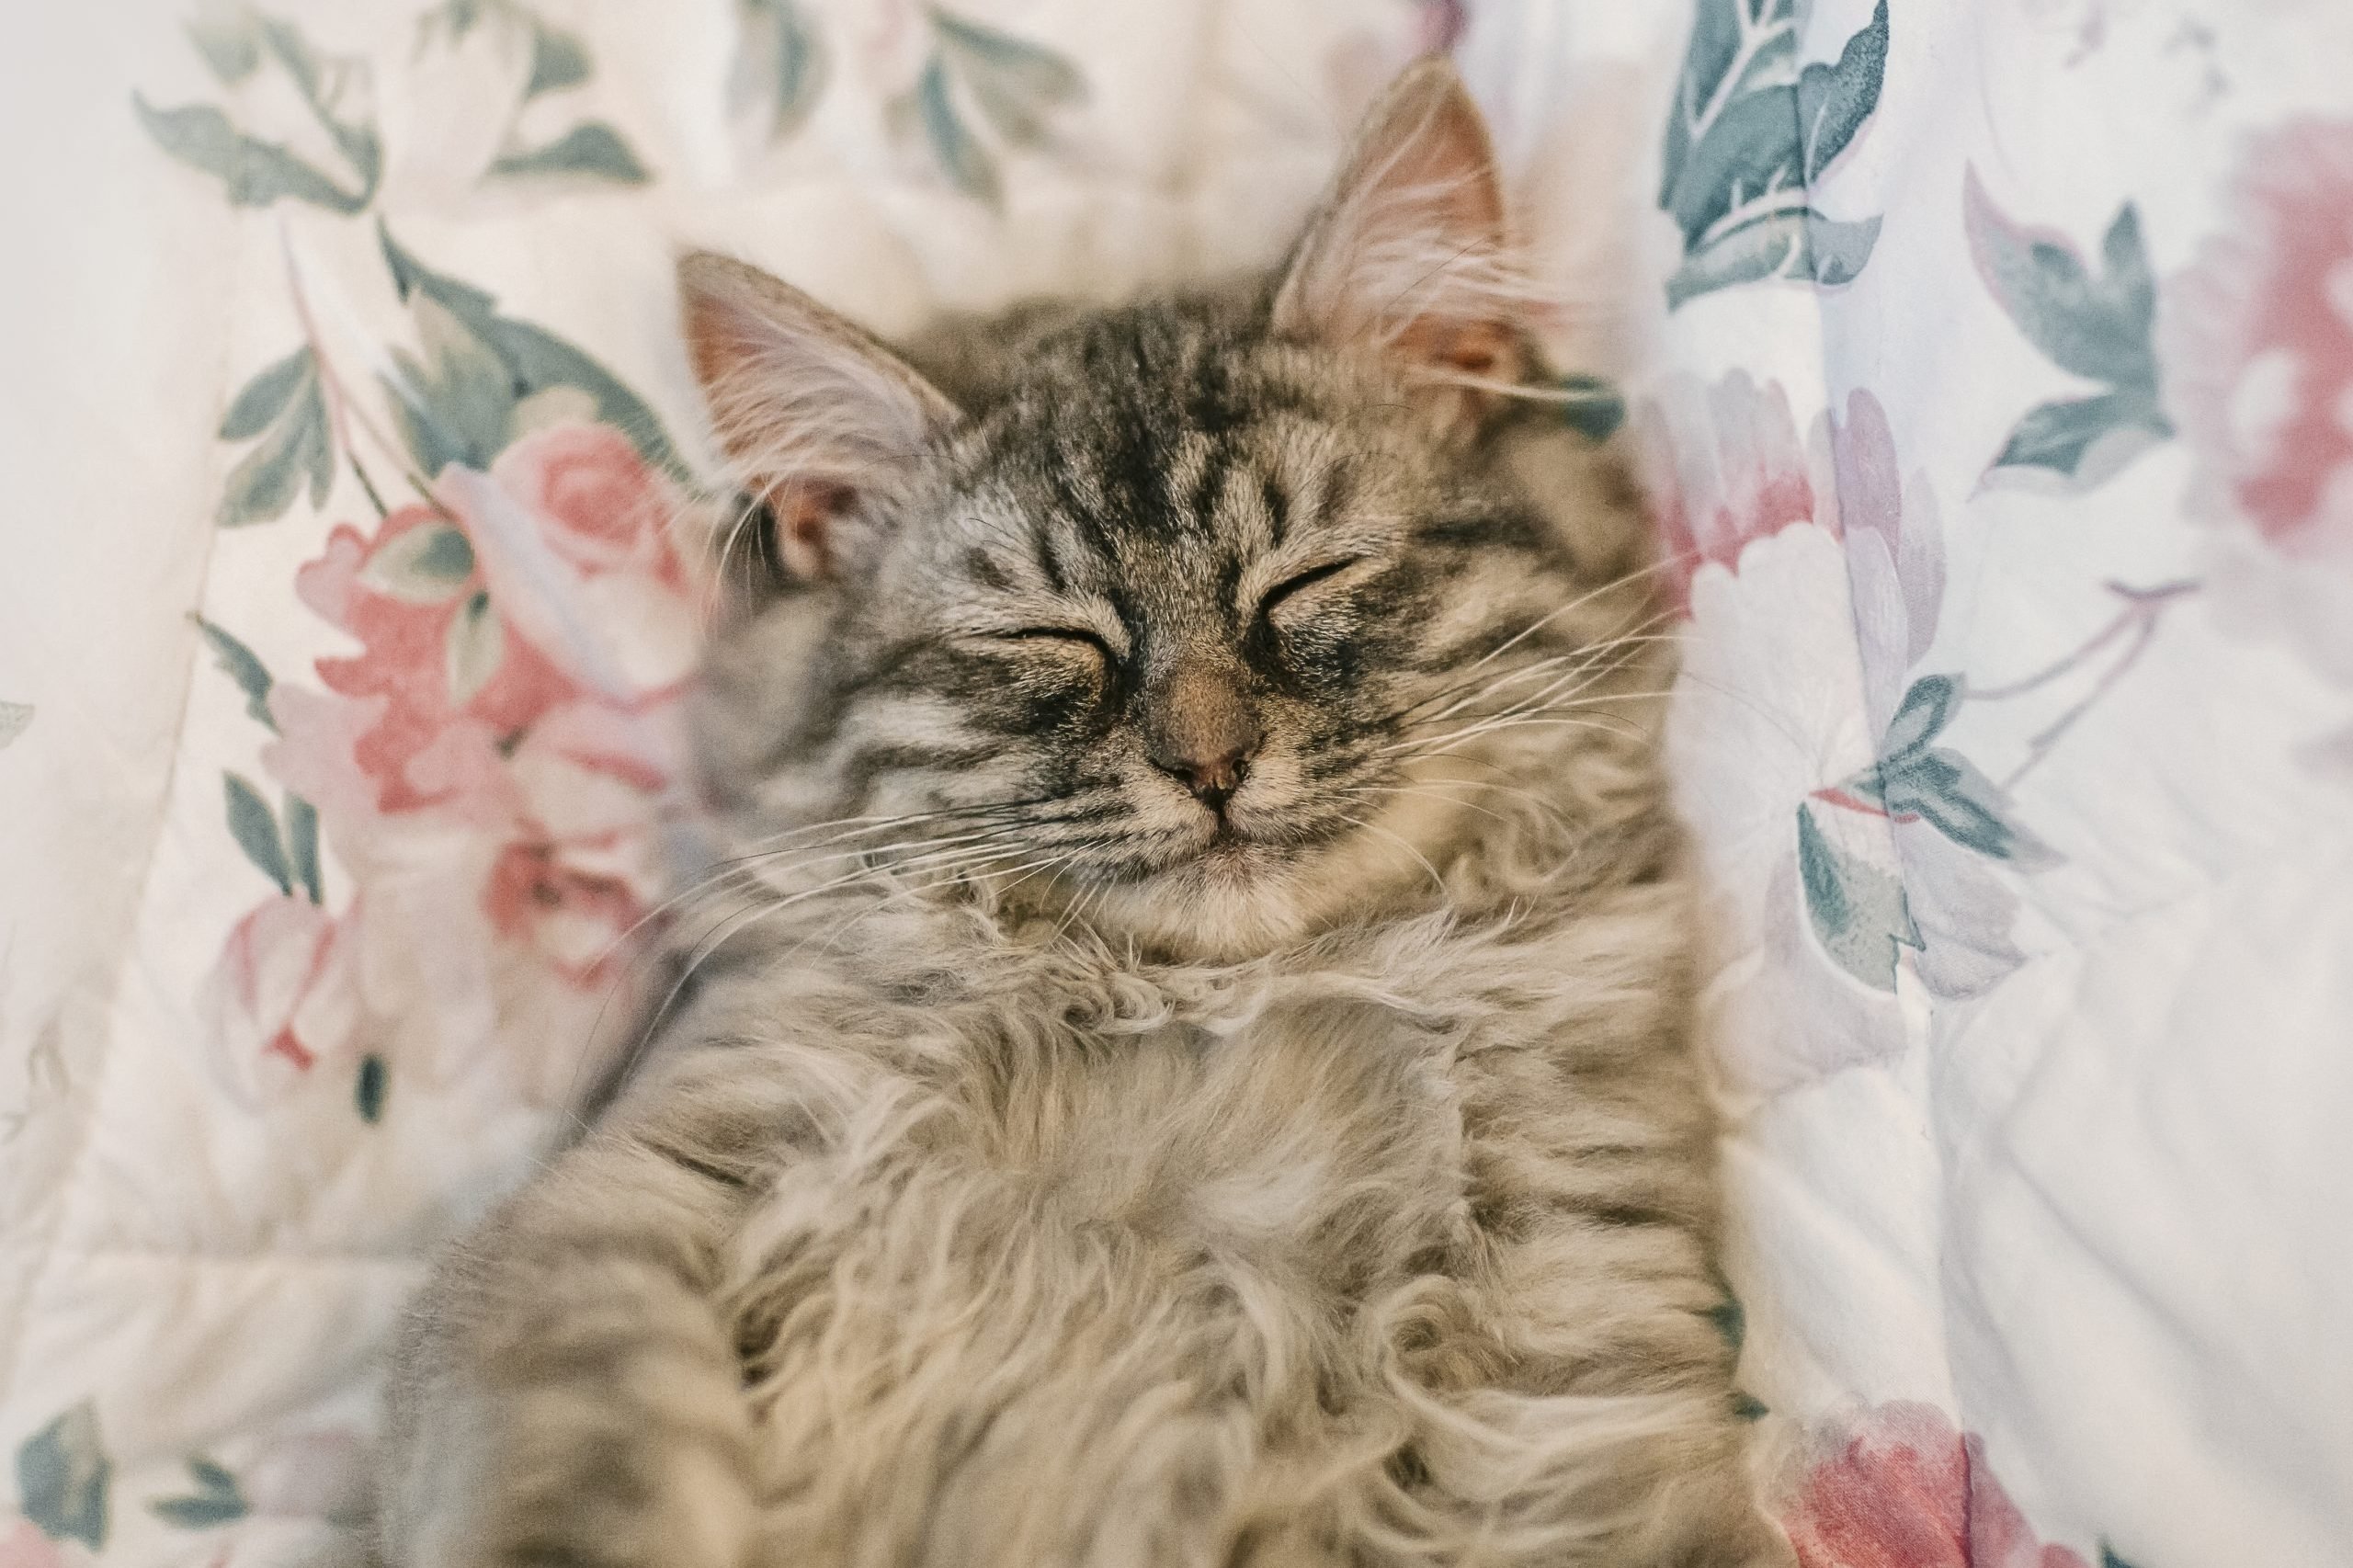 Sleeping cute kitten with smile